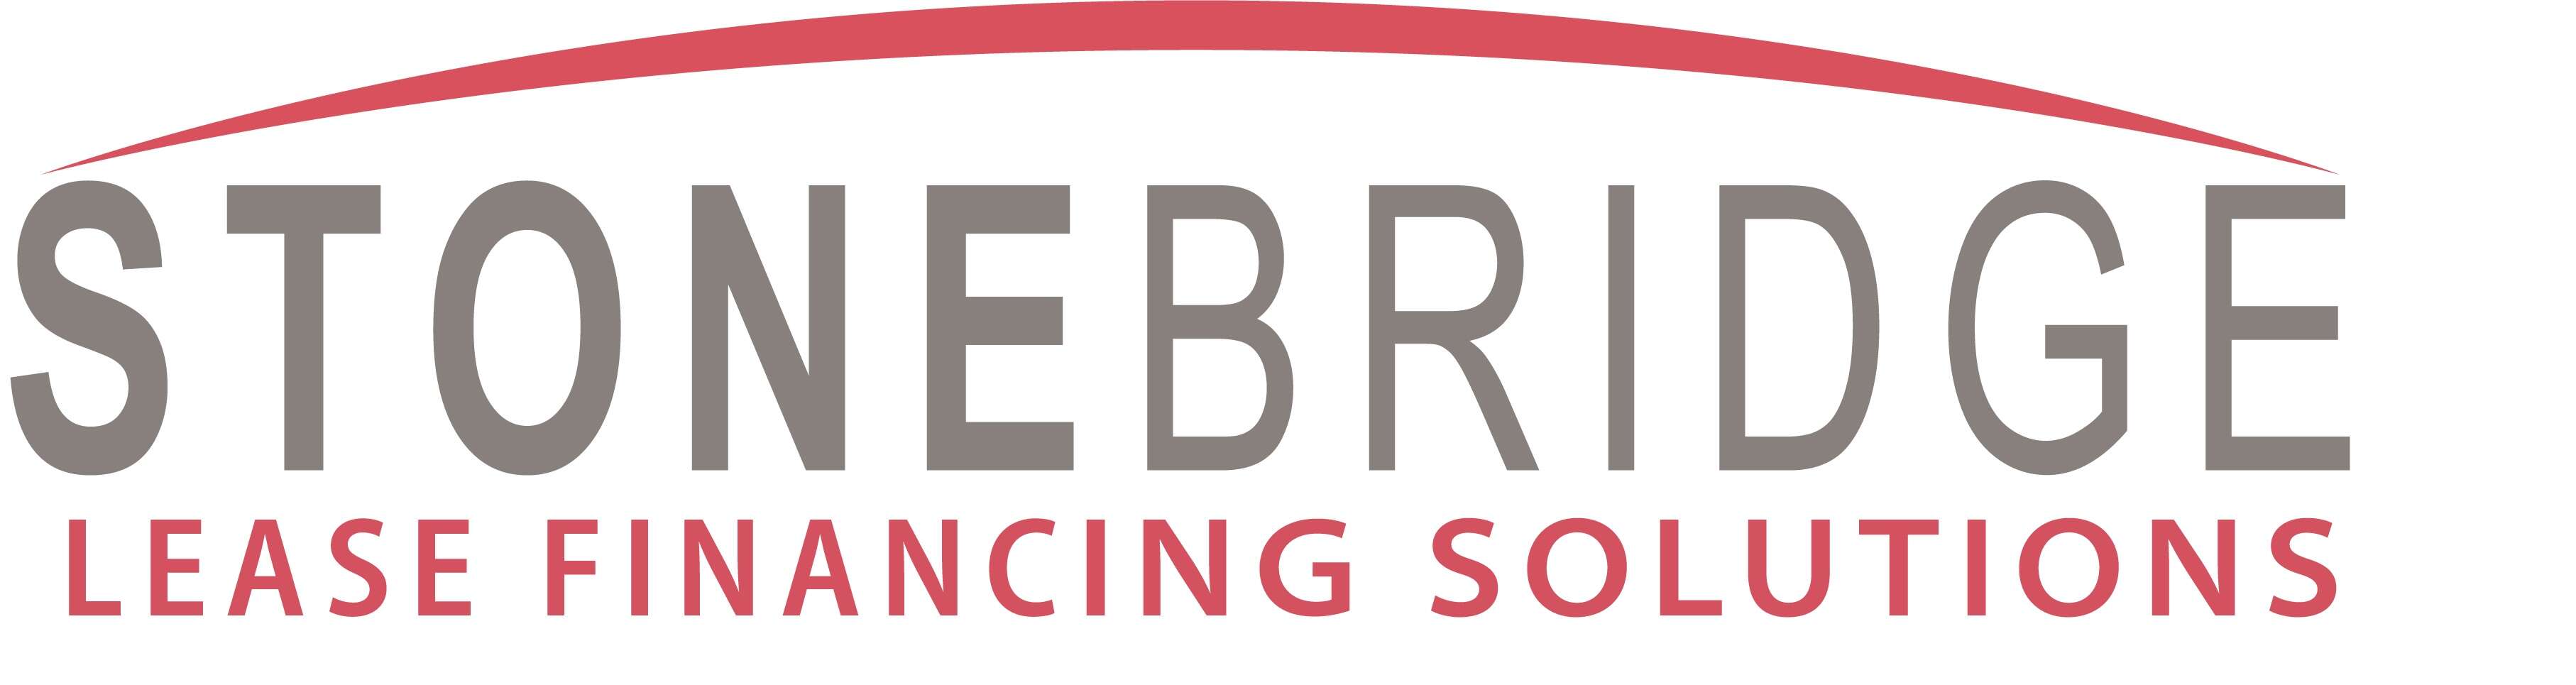 Stonebridge Lease Financing Solutions Inc.